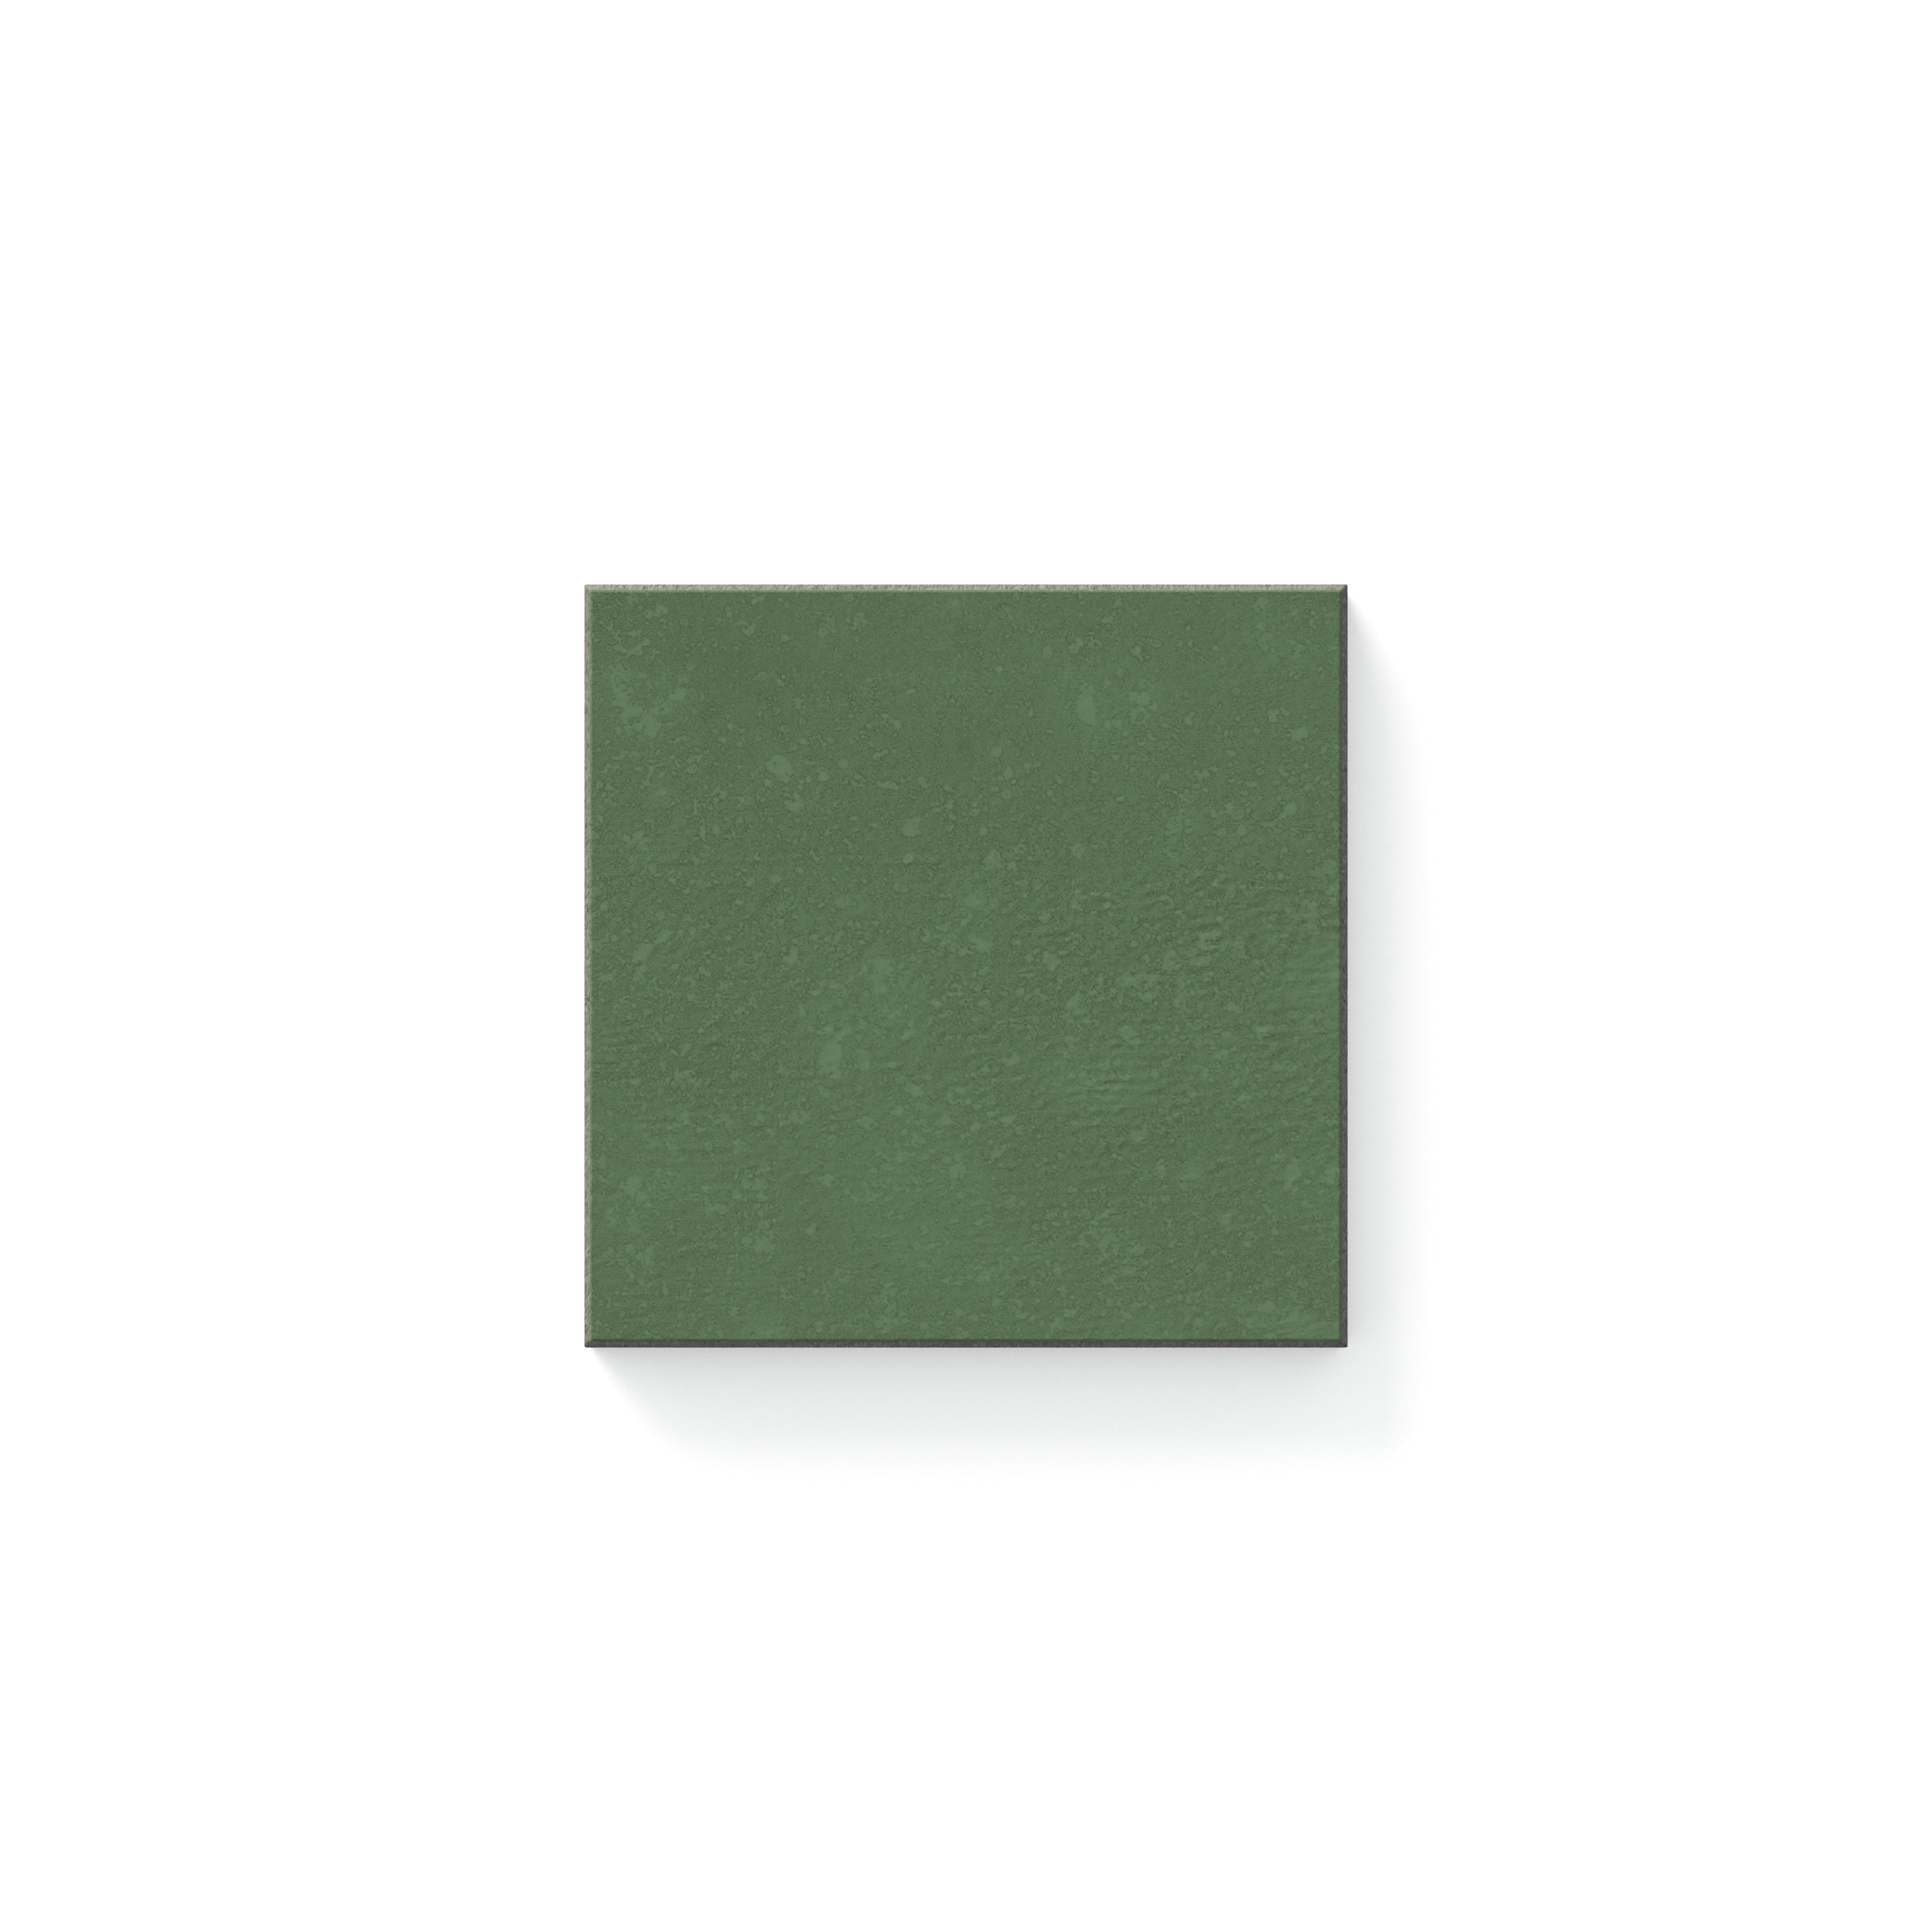 Dax Matte Forest 4x4 Tile Sample